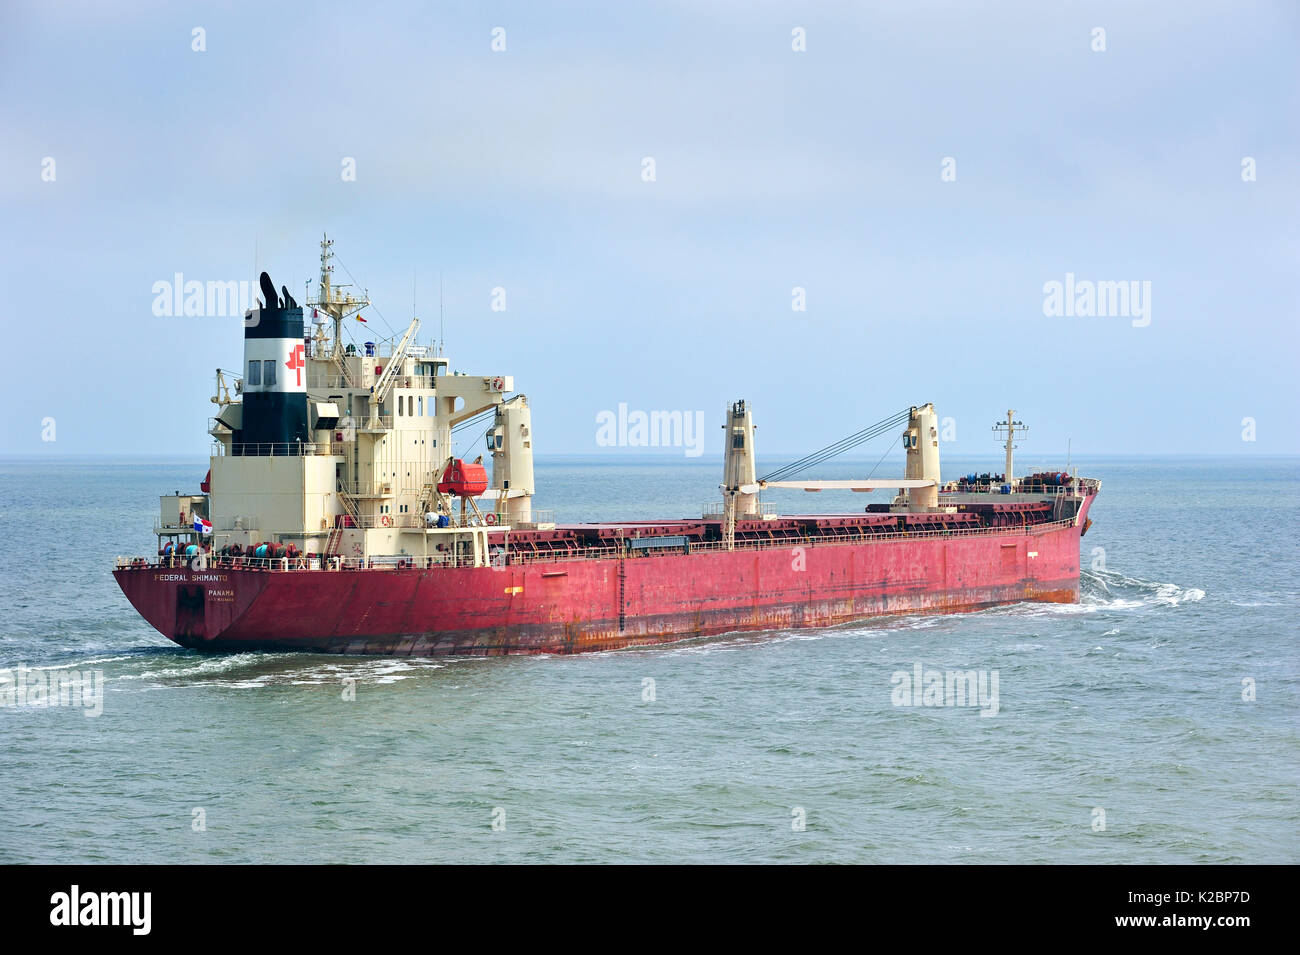 Cargo ship in the North Sea, Europe. June 2010. Stock Photo